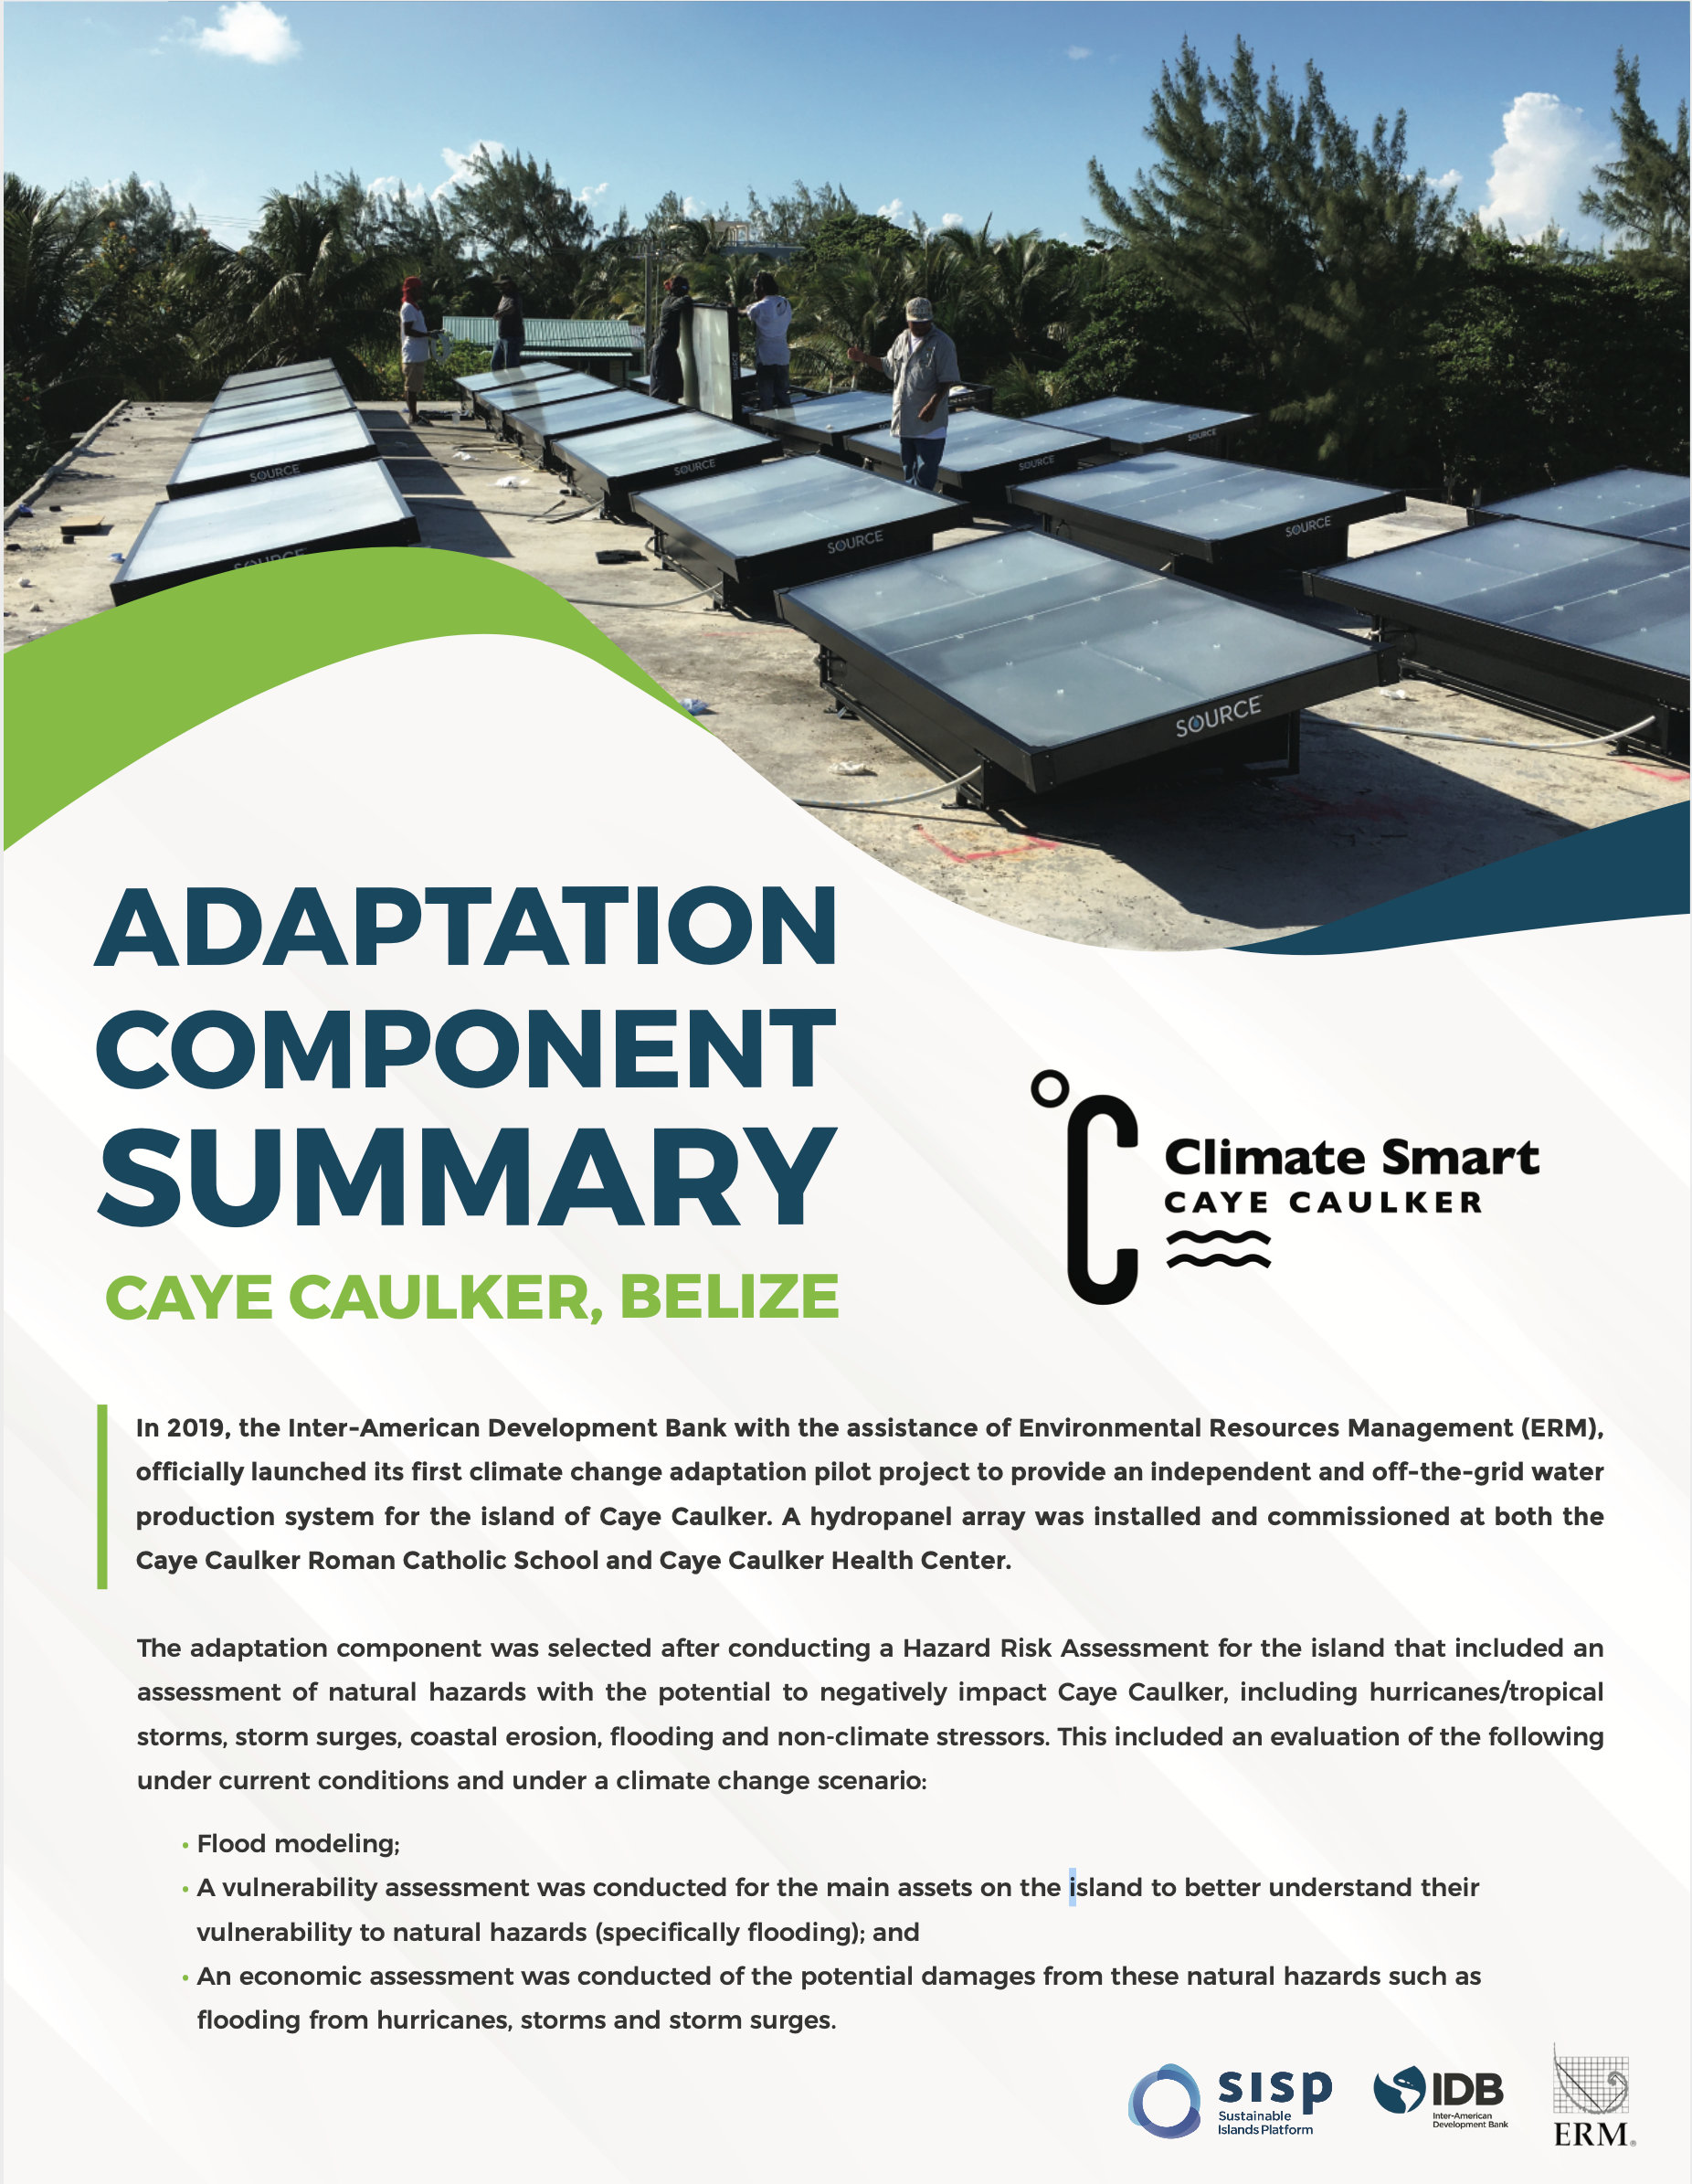 Caye Caulker Adaptation Component Summary